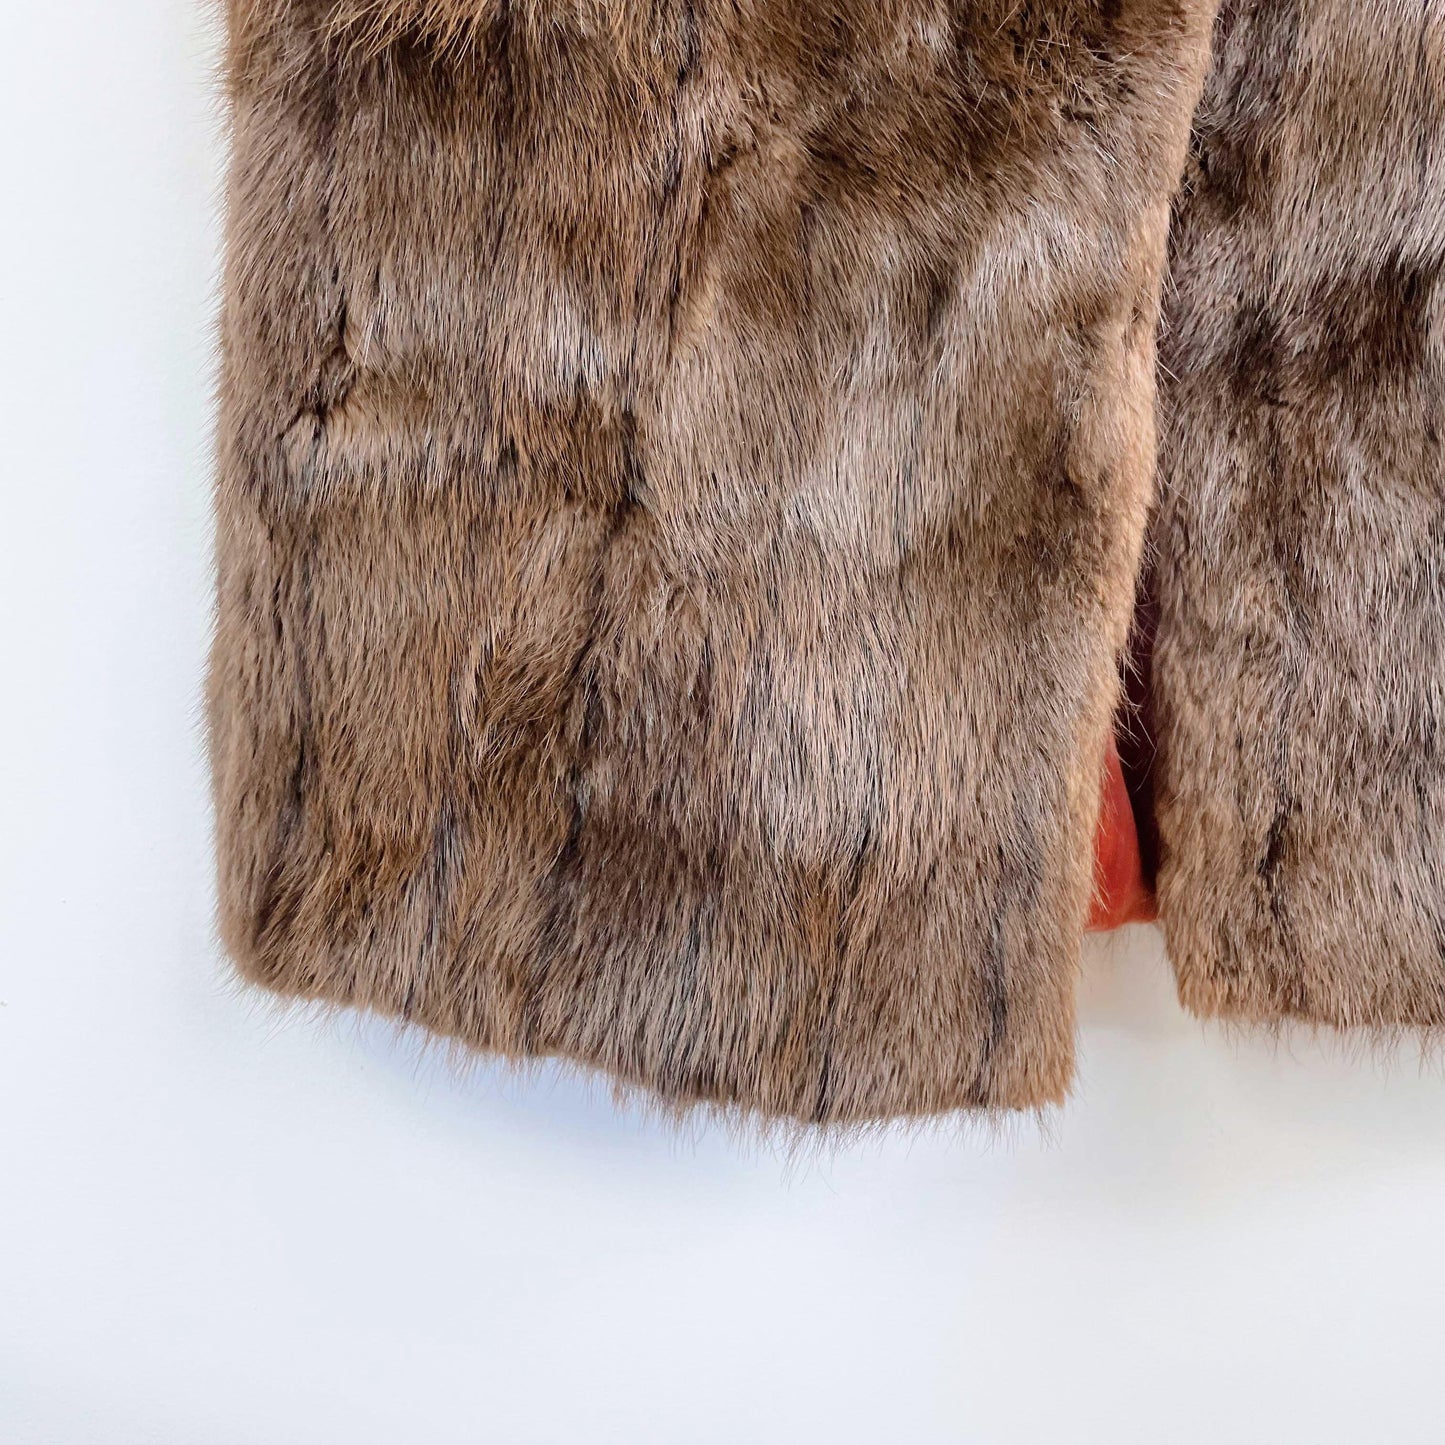 vintage long brown mink fur coat